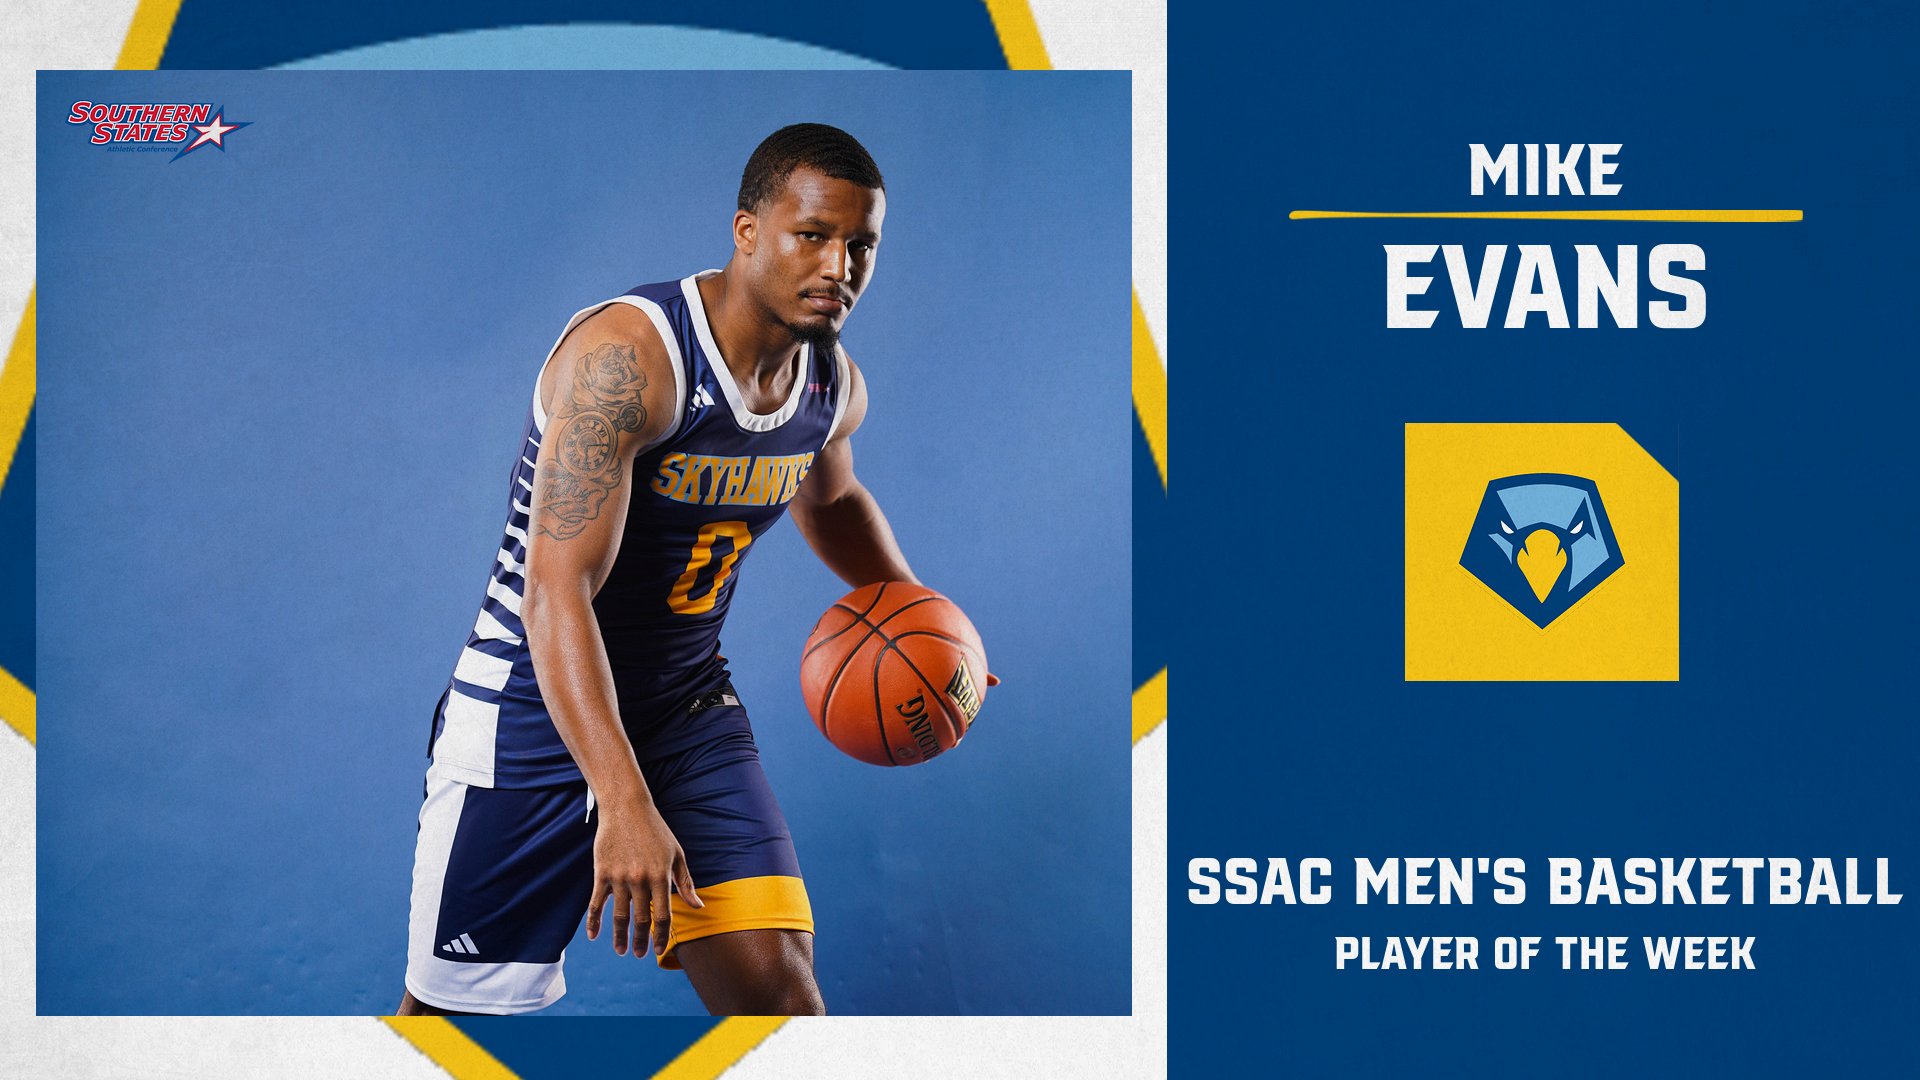 Mike Evans’ season-high earns him SSAC Men’s Basketball Player of the Week